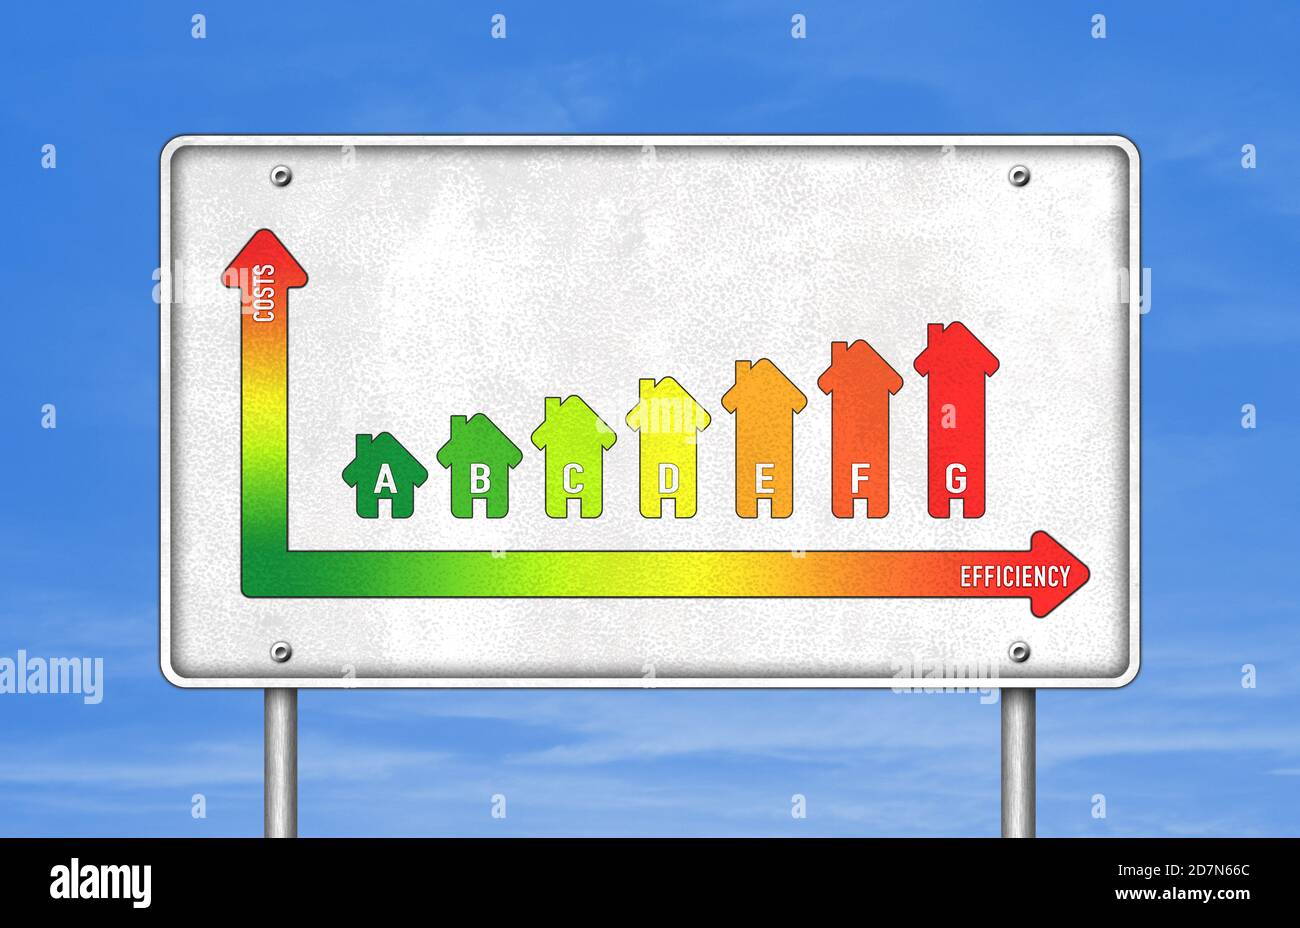 Energy efficiency rating Stock Photo